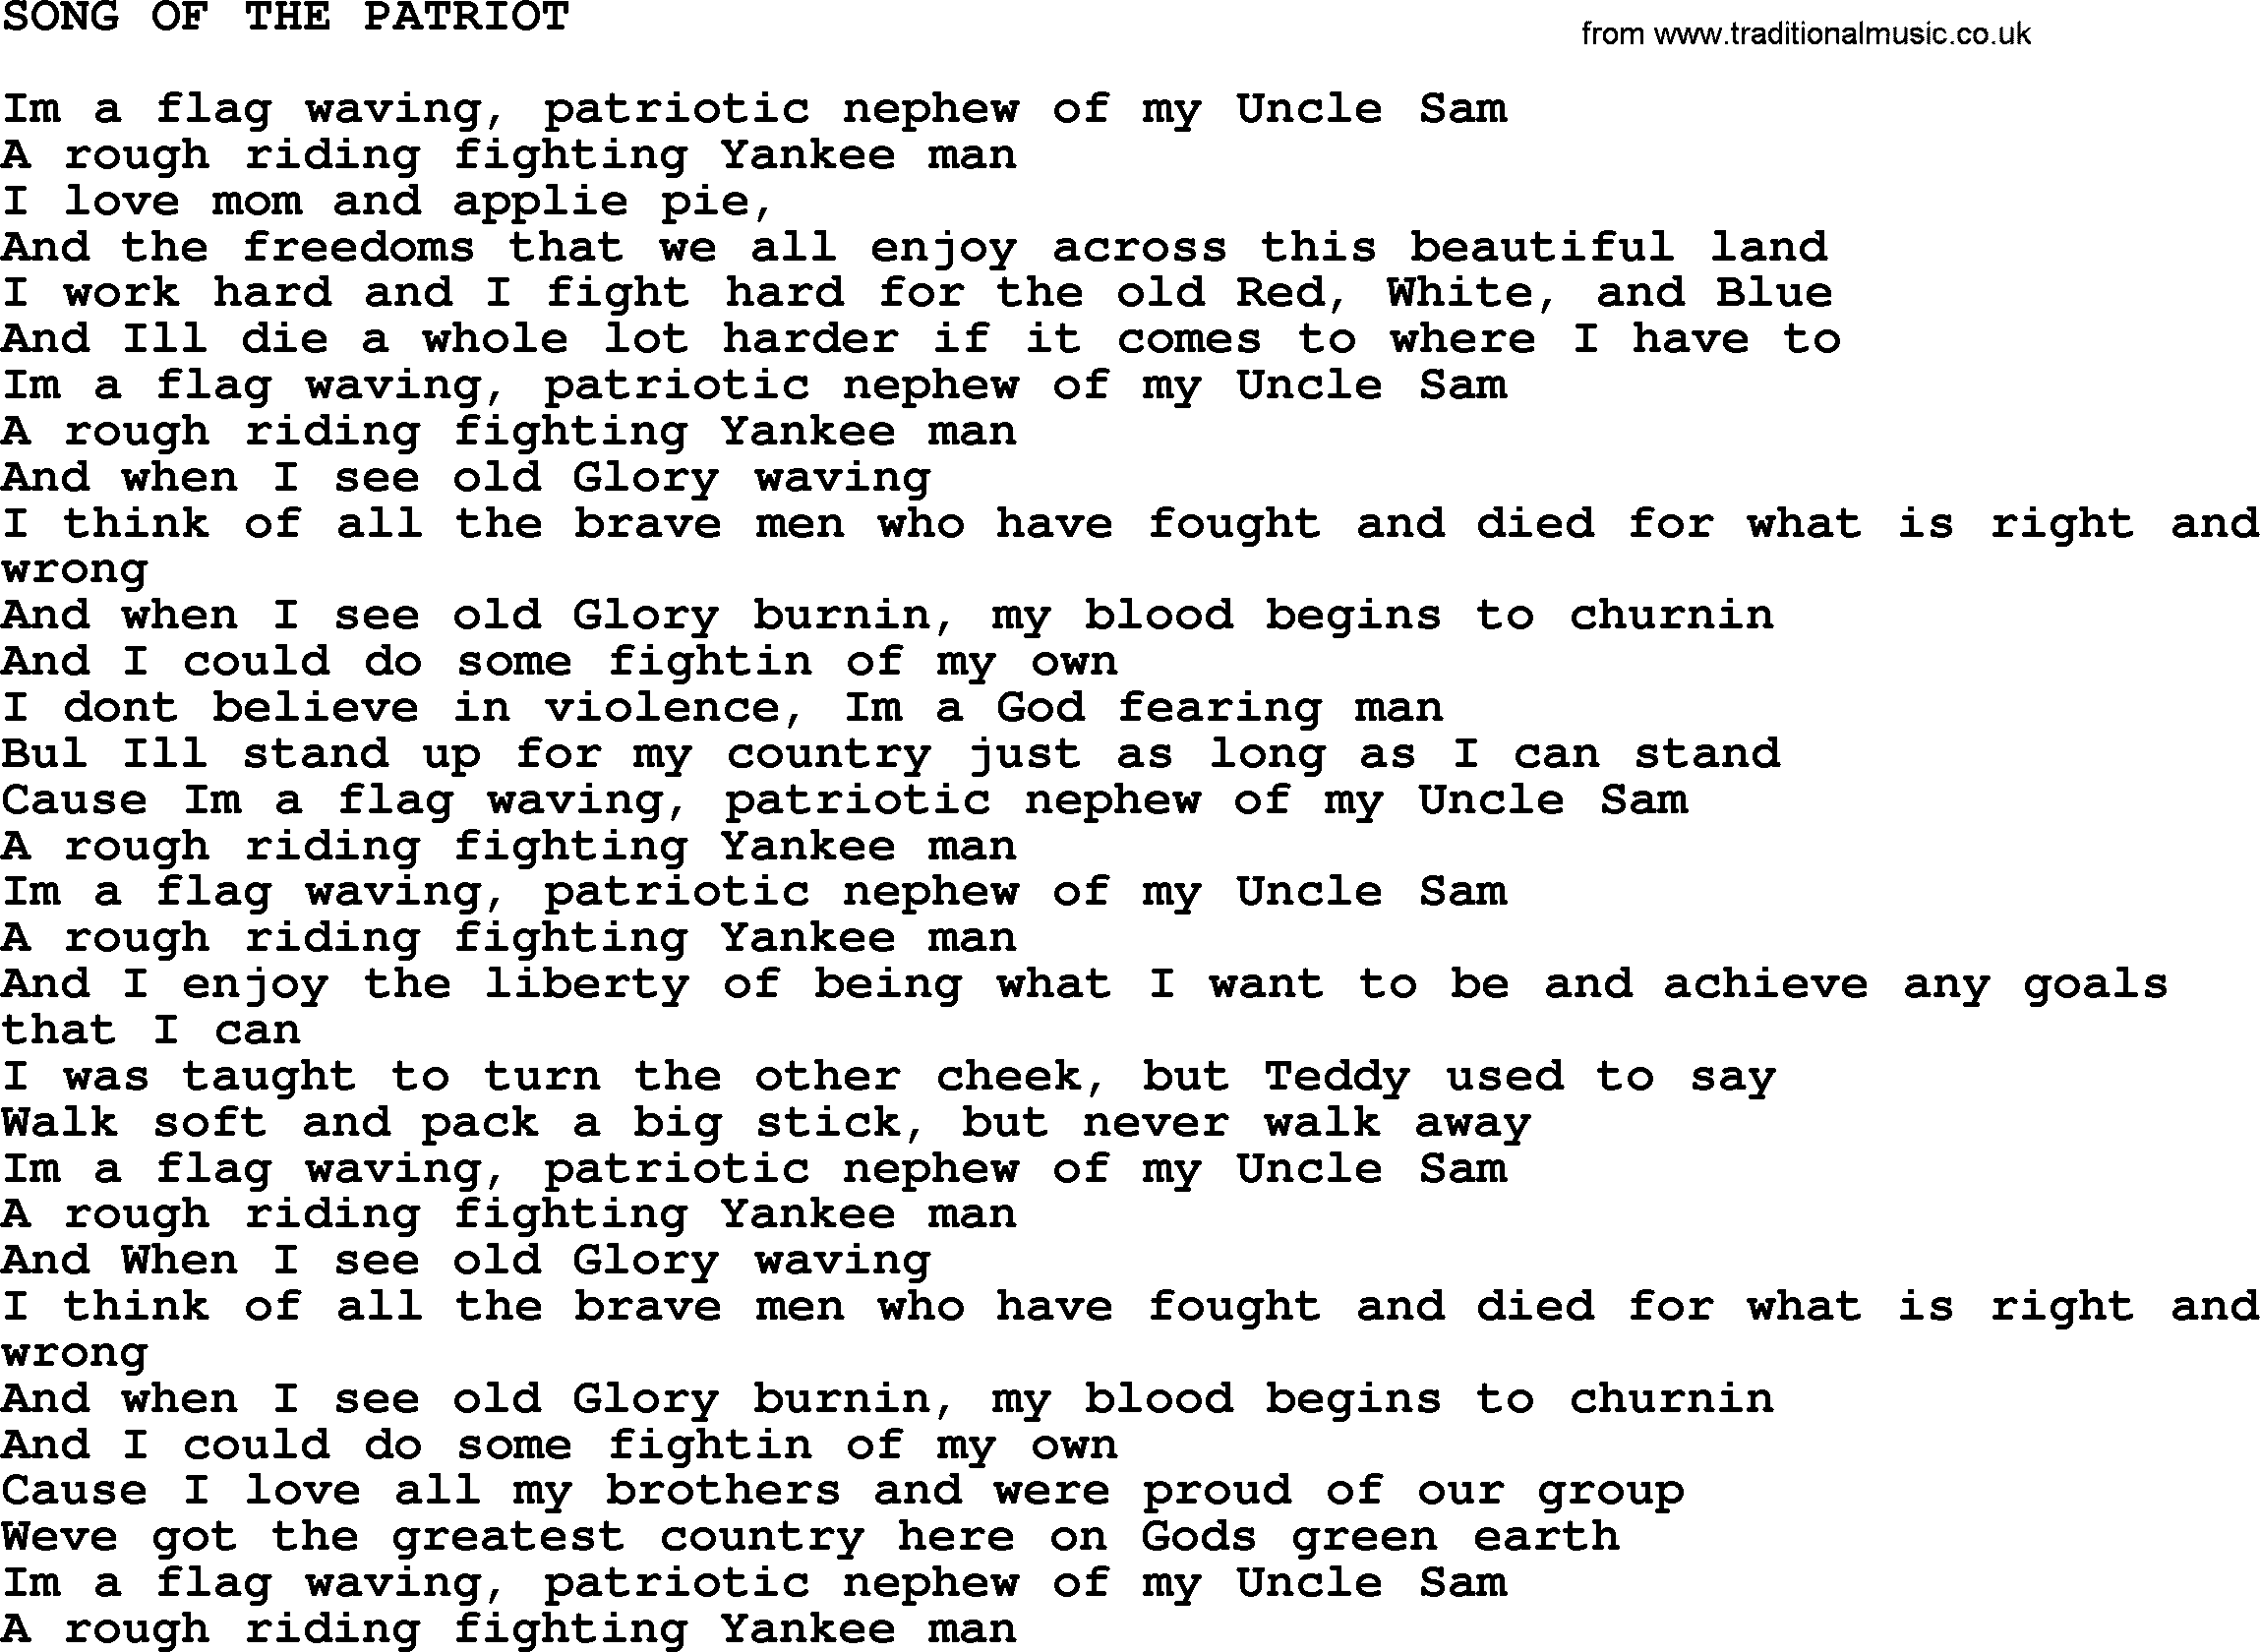 Johnny Cash song Song Of The Patriot.txt lyrics